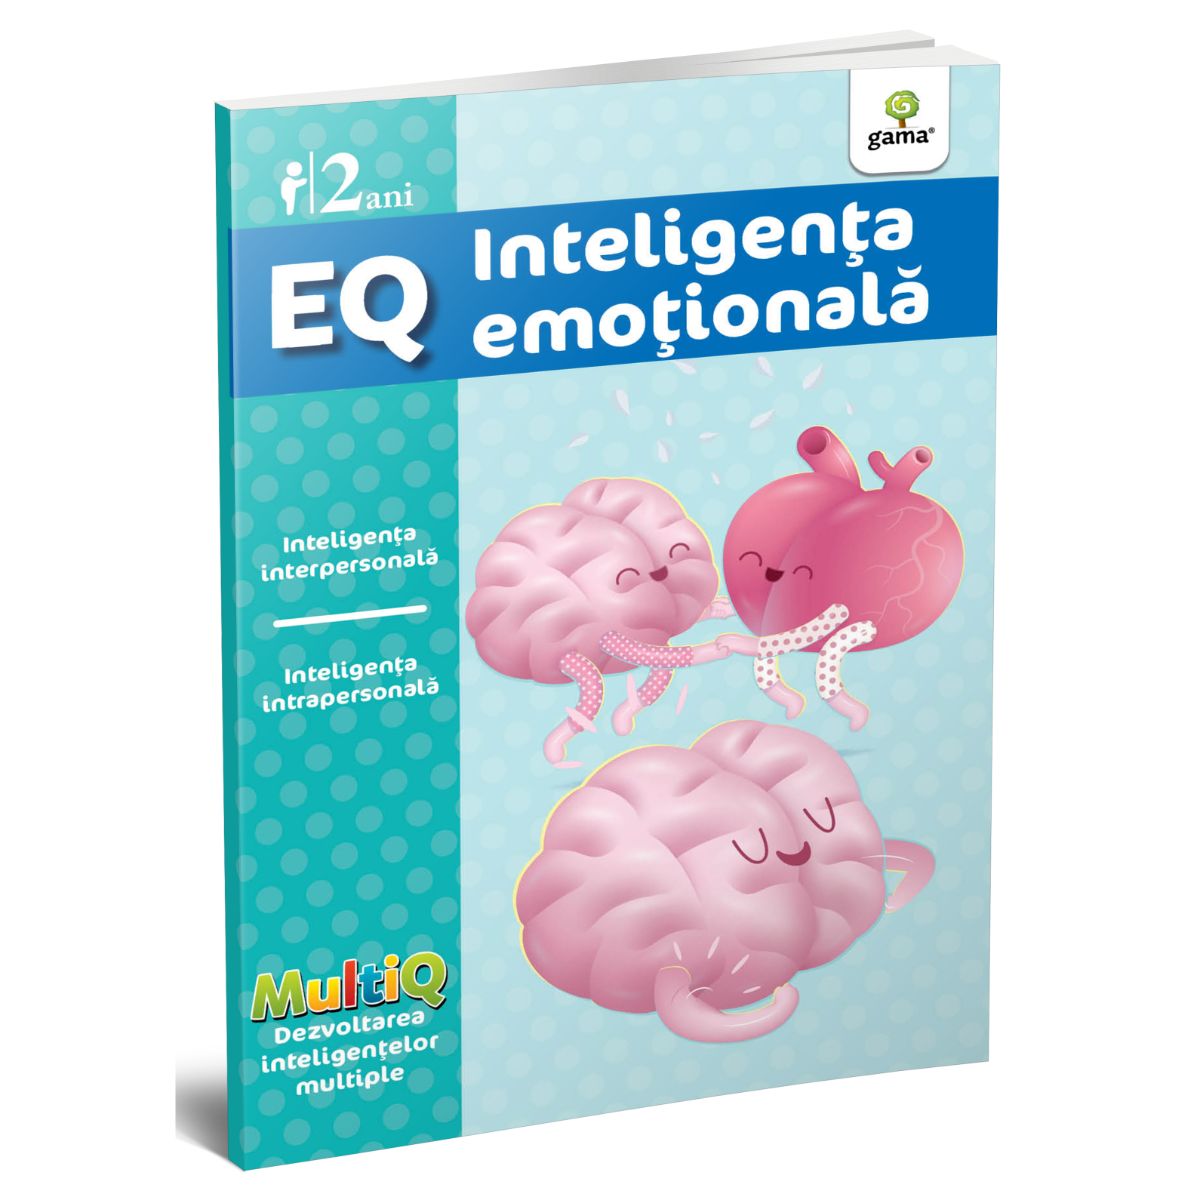 EQ. Inteligenta emotionala, 2 ani, MultiQ